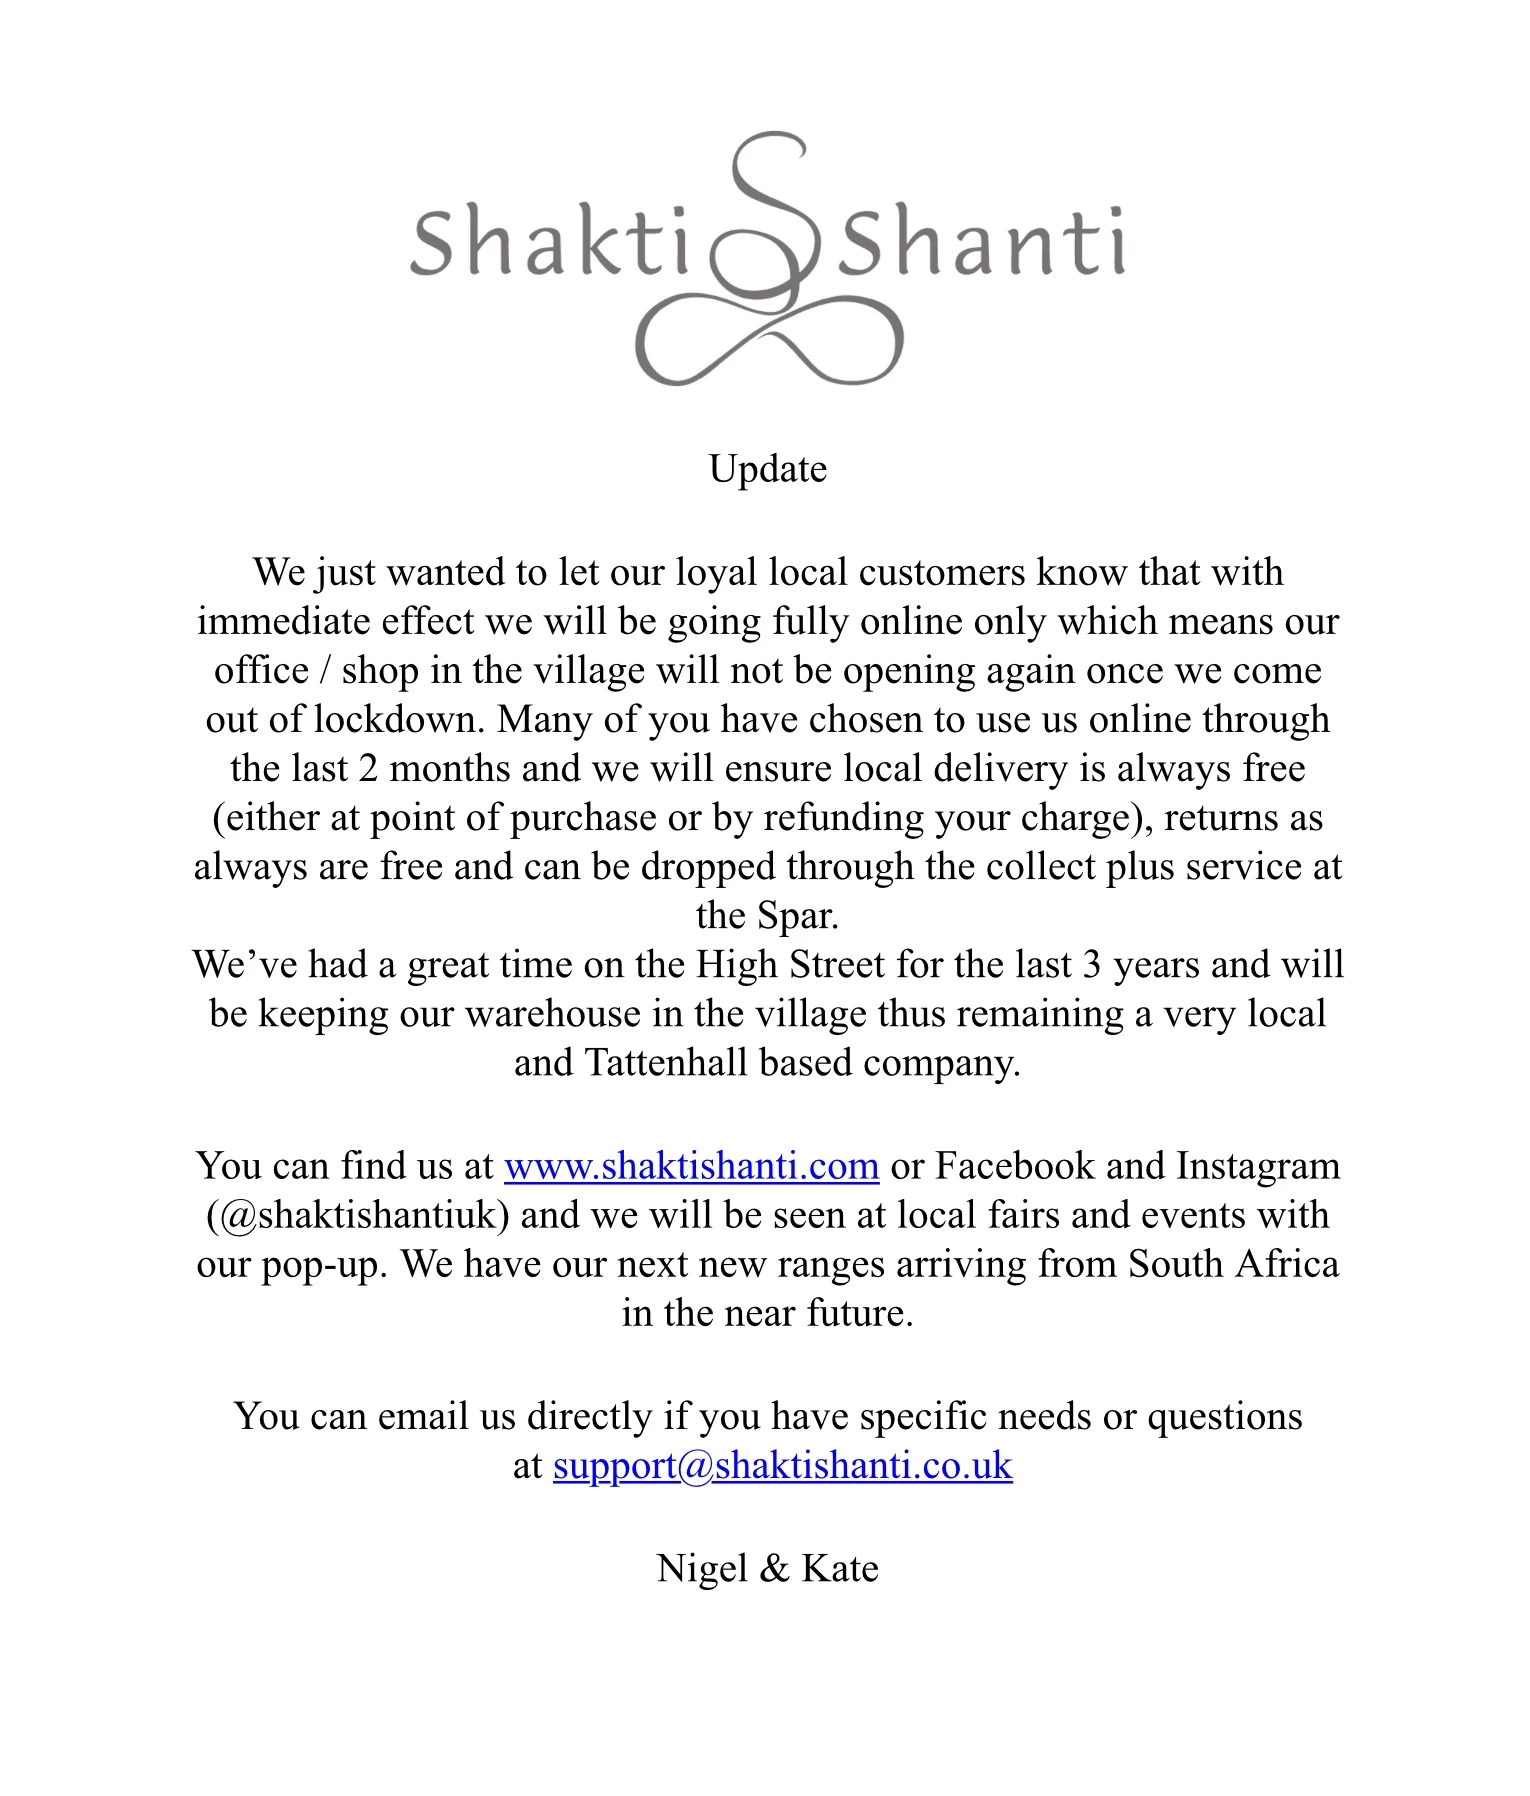 shakti shanti news update